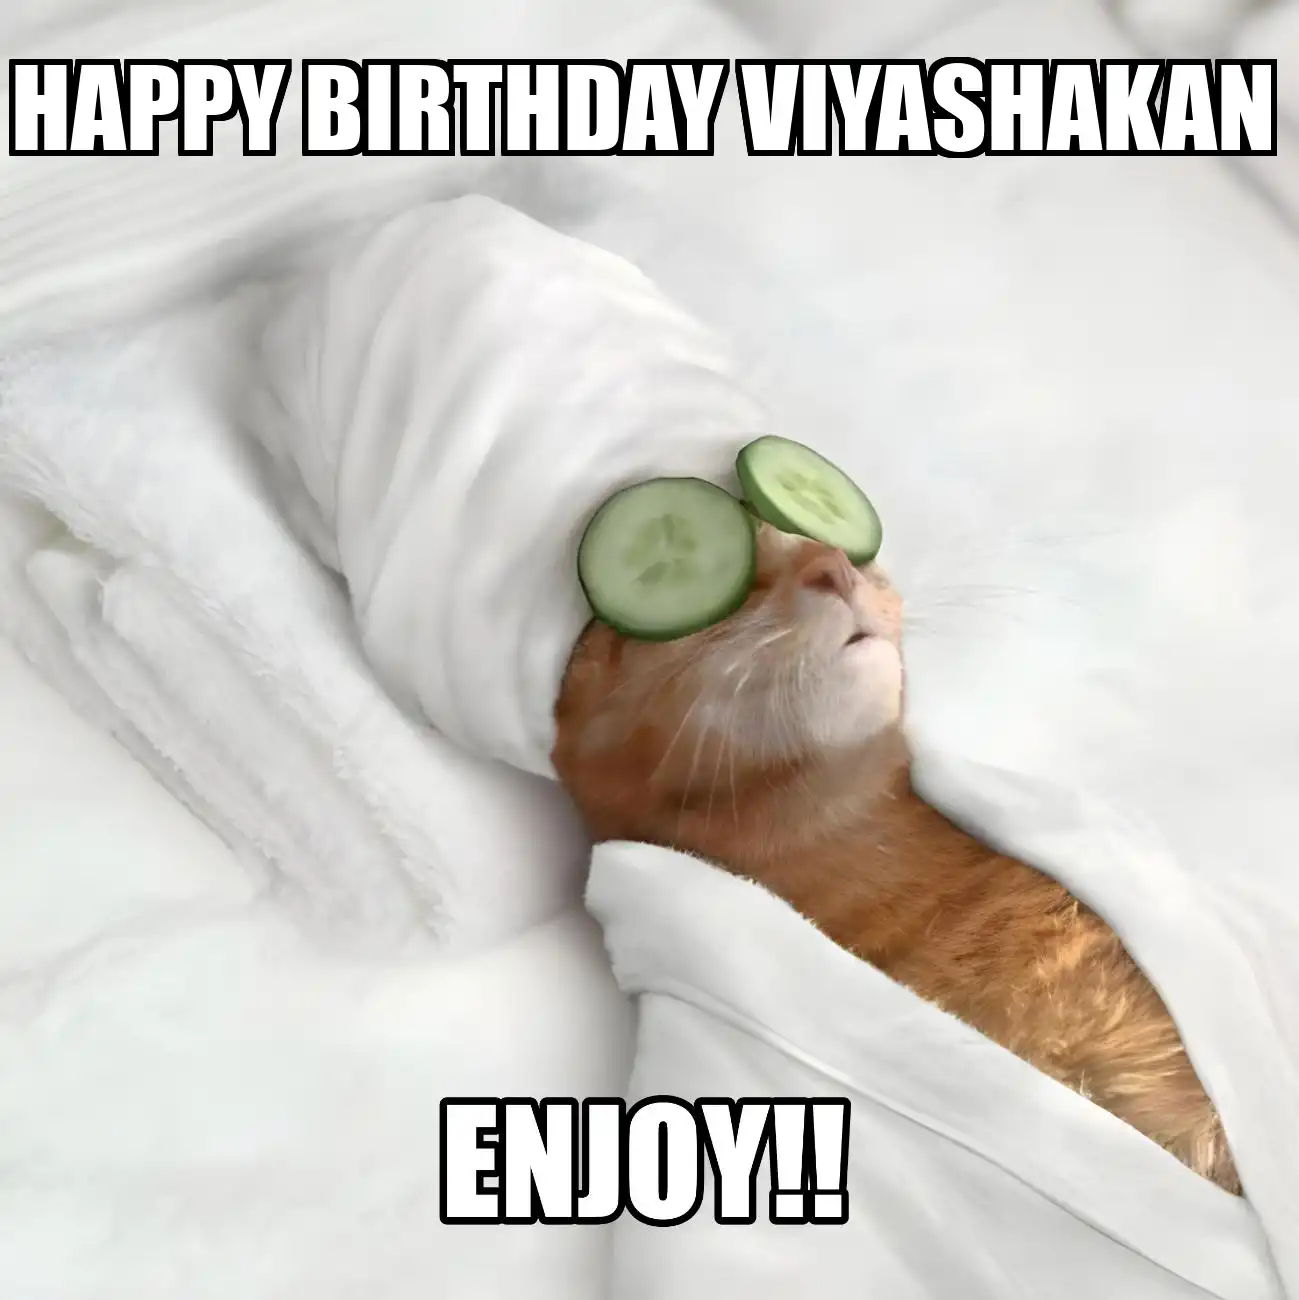 Happy Birthday Viyashakan Enjoy Cat Meme